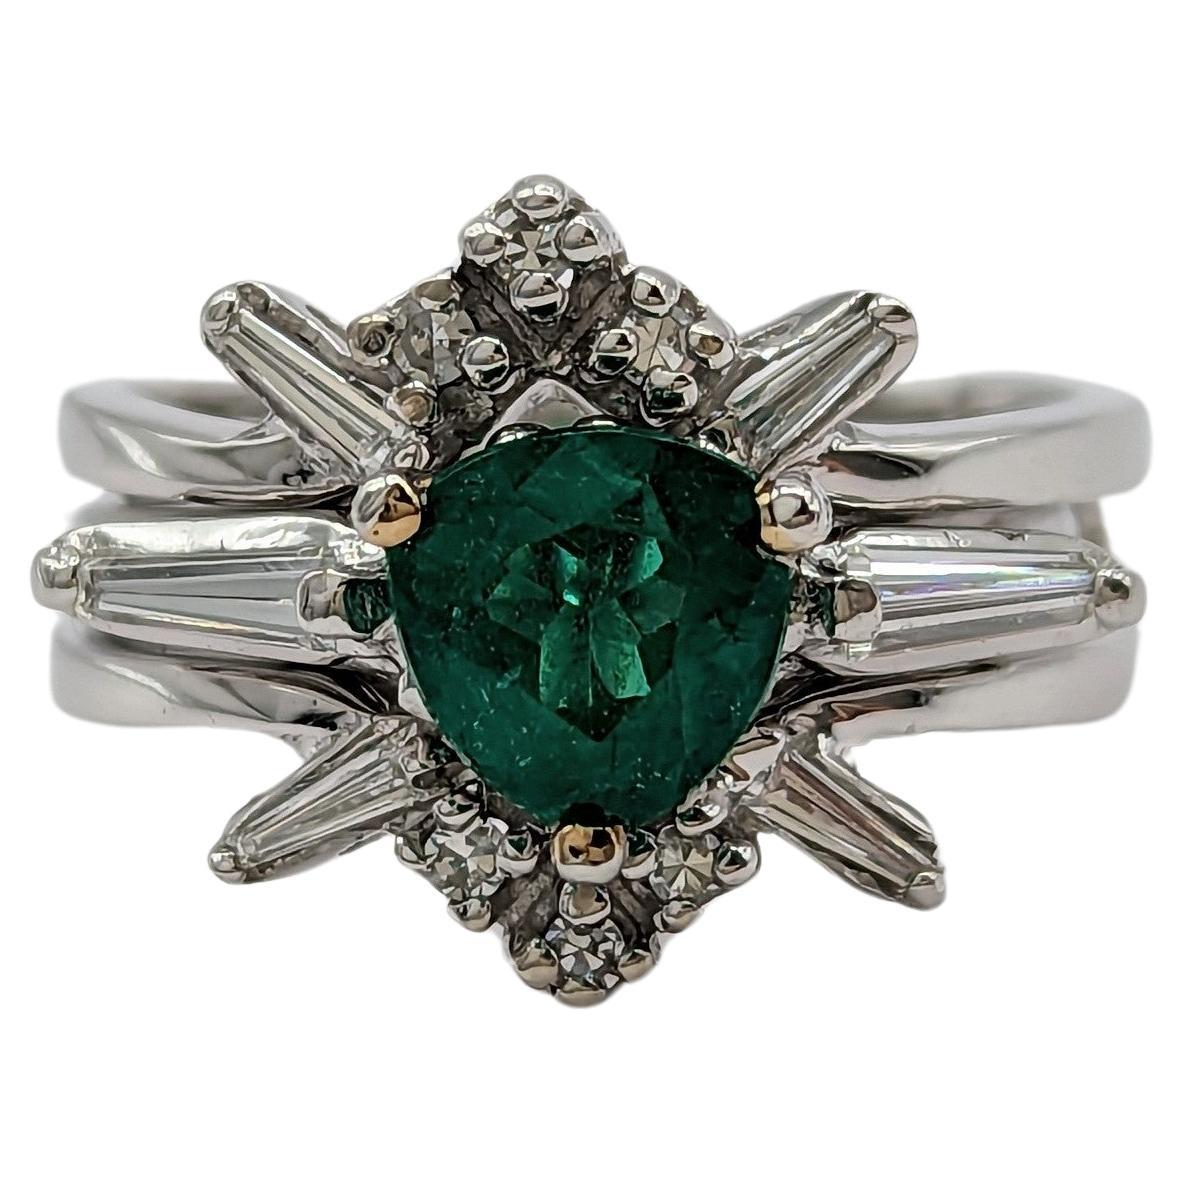 Emerald and White Diamond Ring in 14K White Gold & Platinum